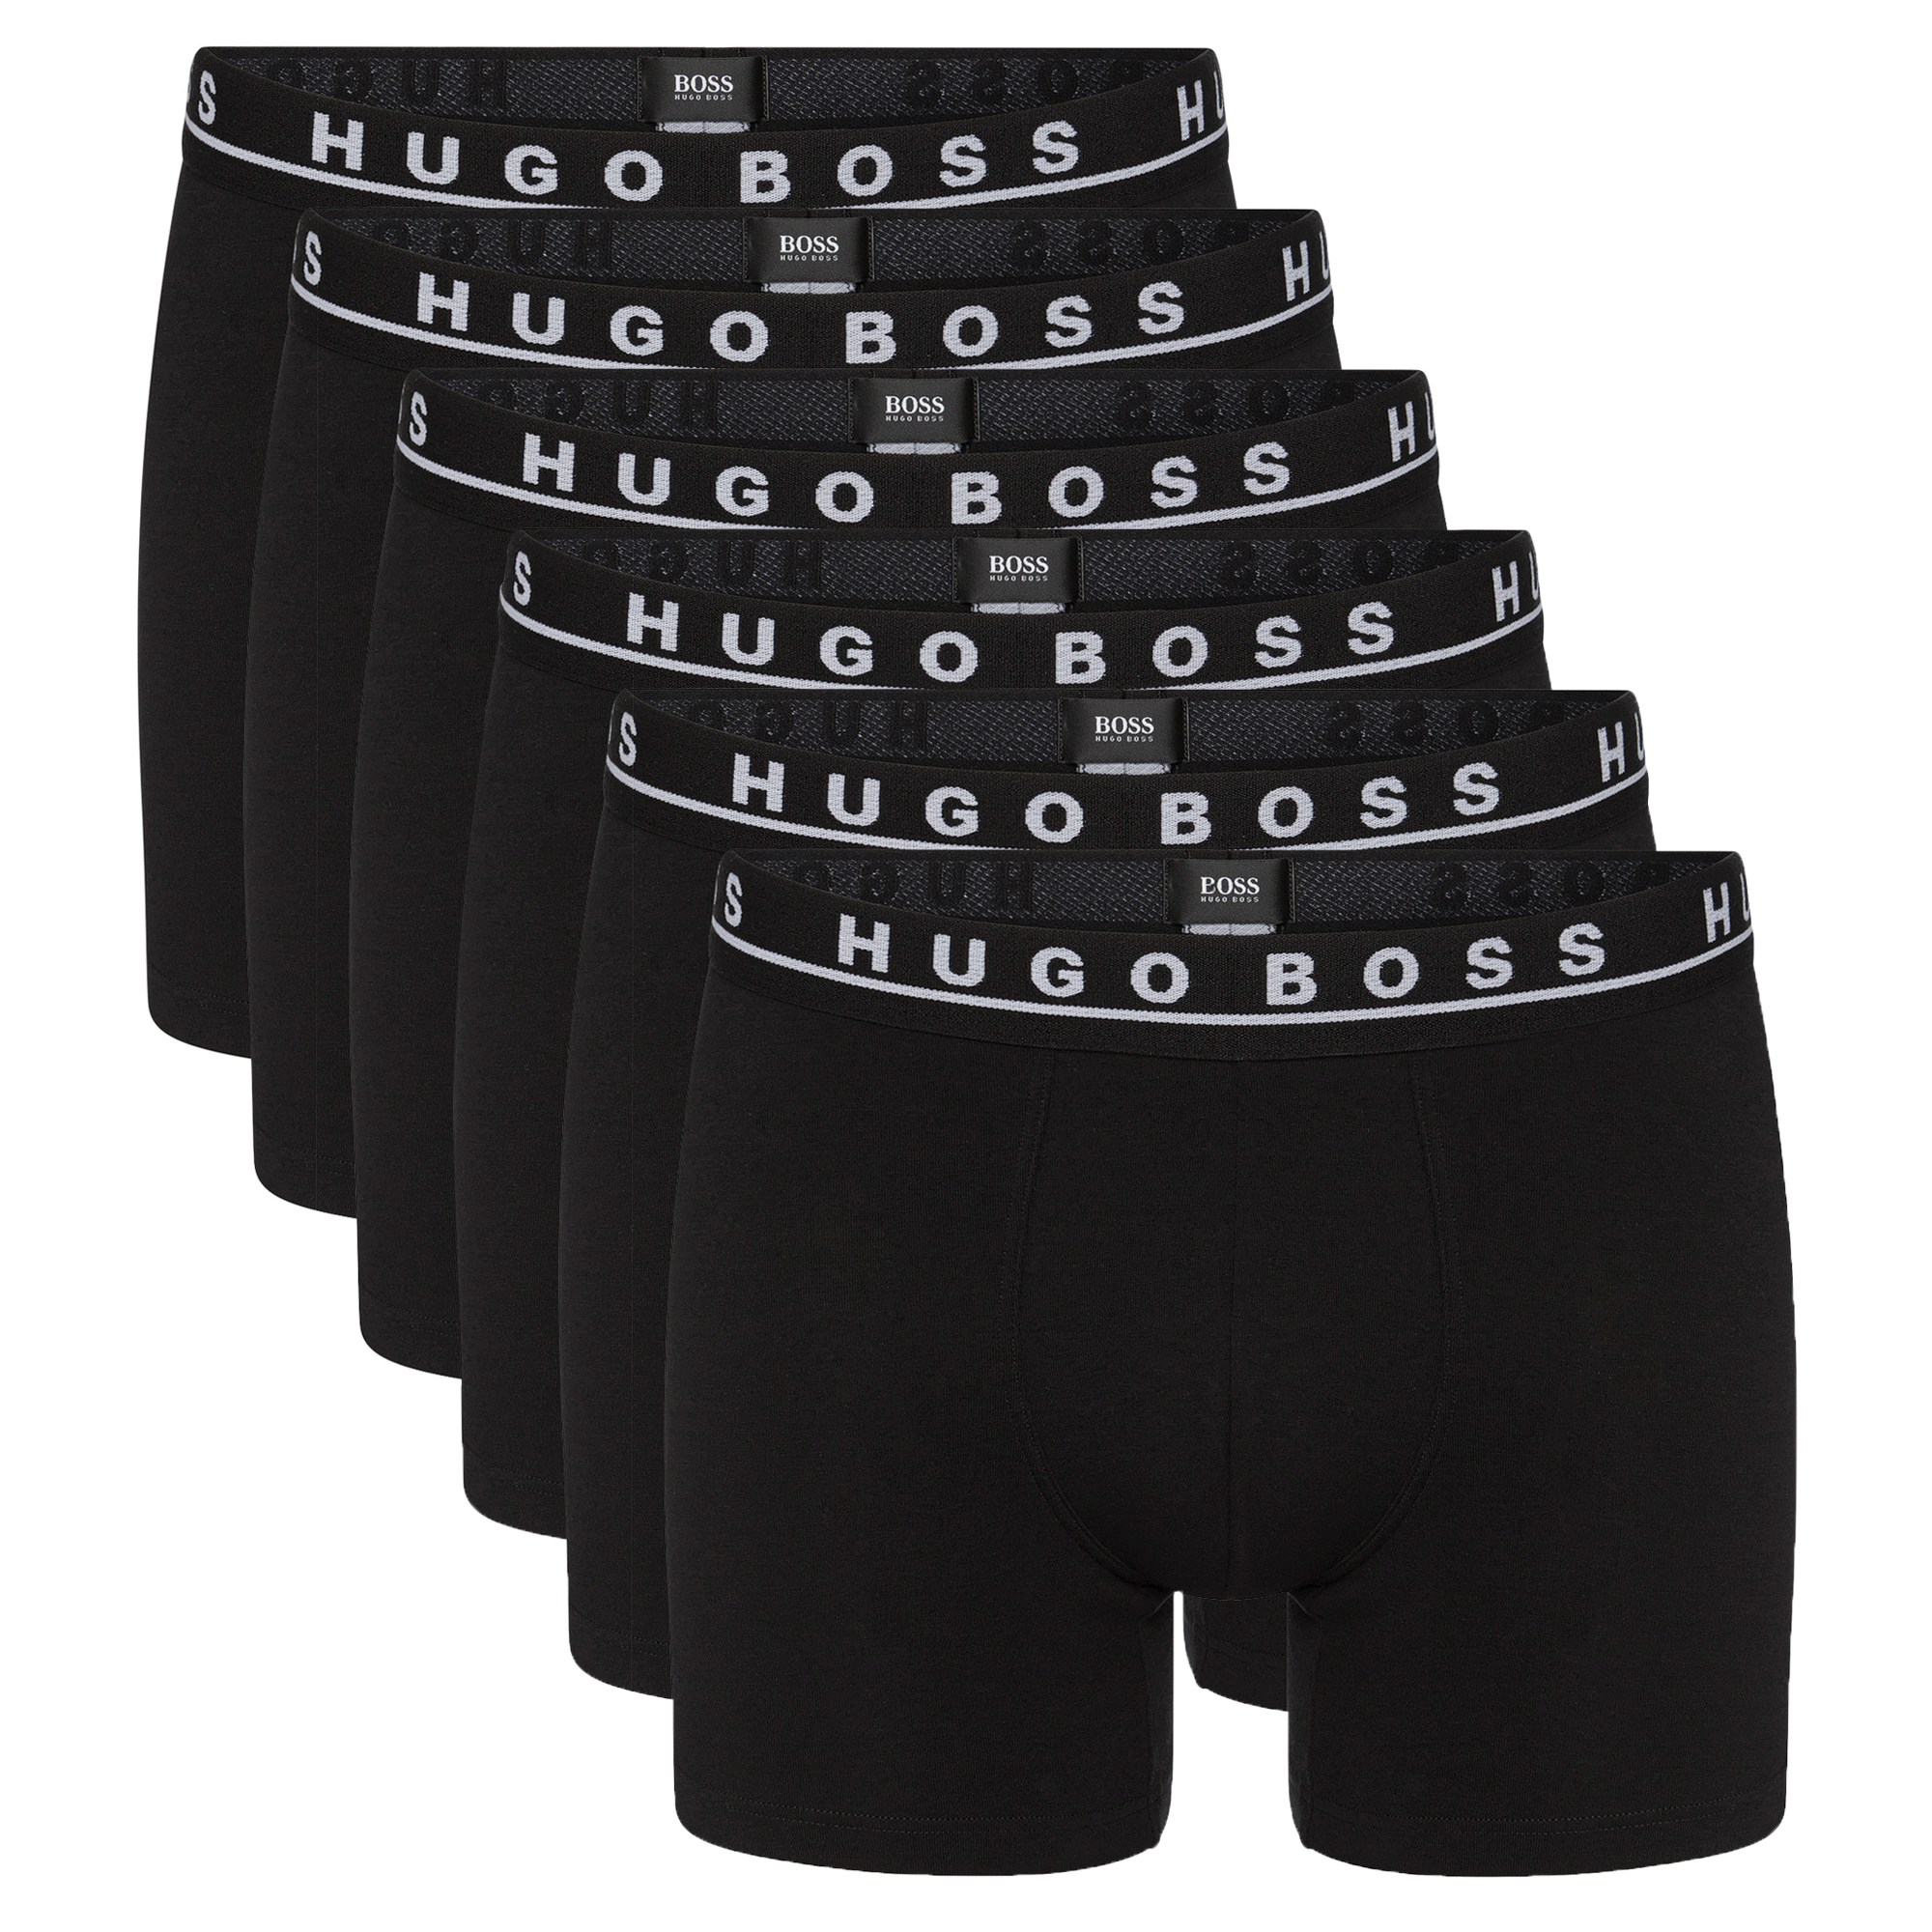 Boxer-short Hugo Boss Brief (Lot de 6)